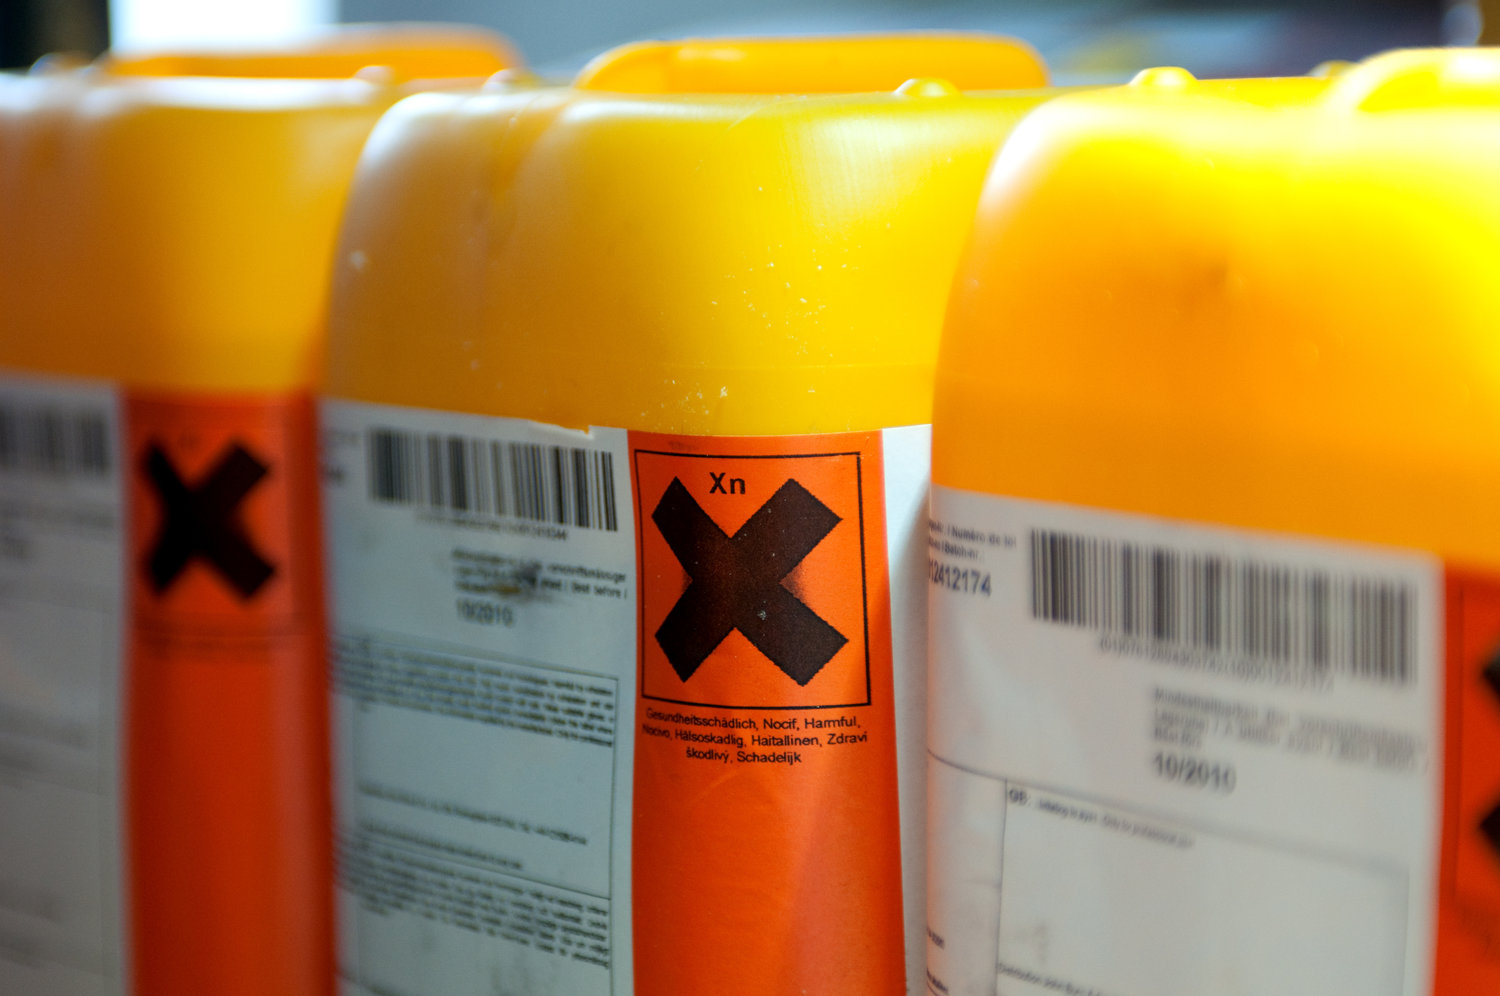 Twelve Rules for Safe Handling of Hazardous Materials — OMAG